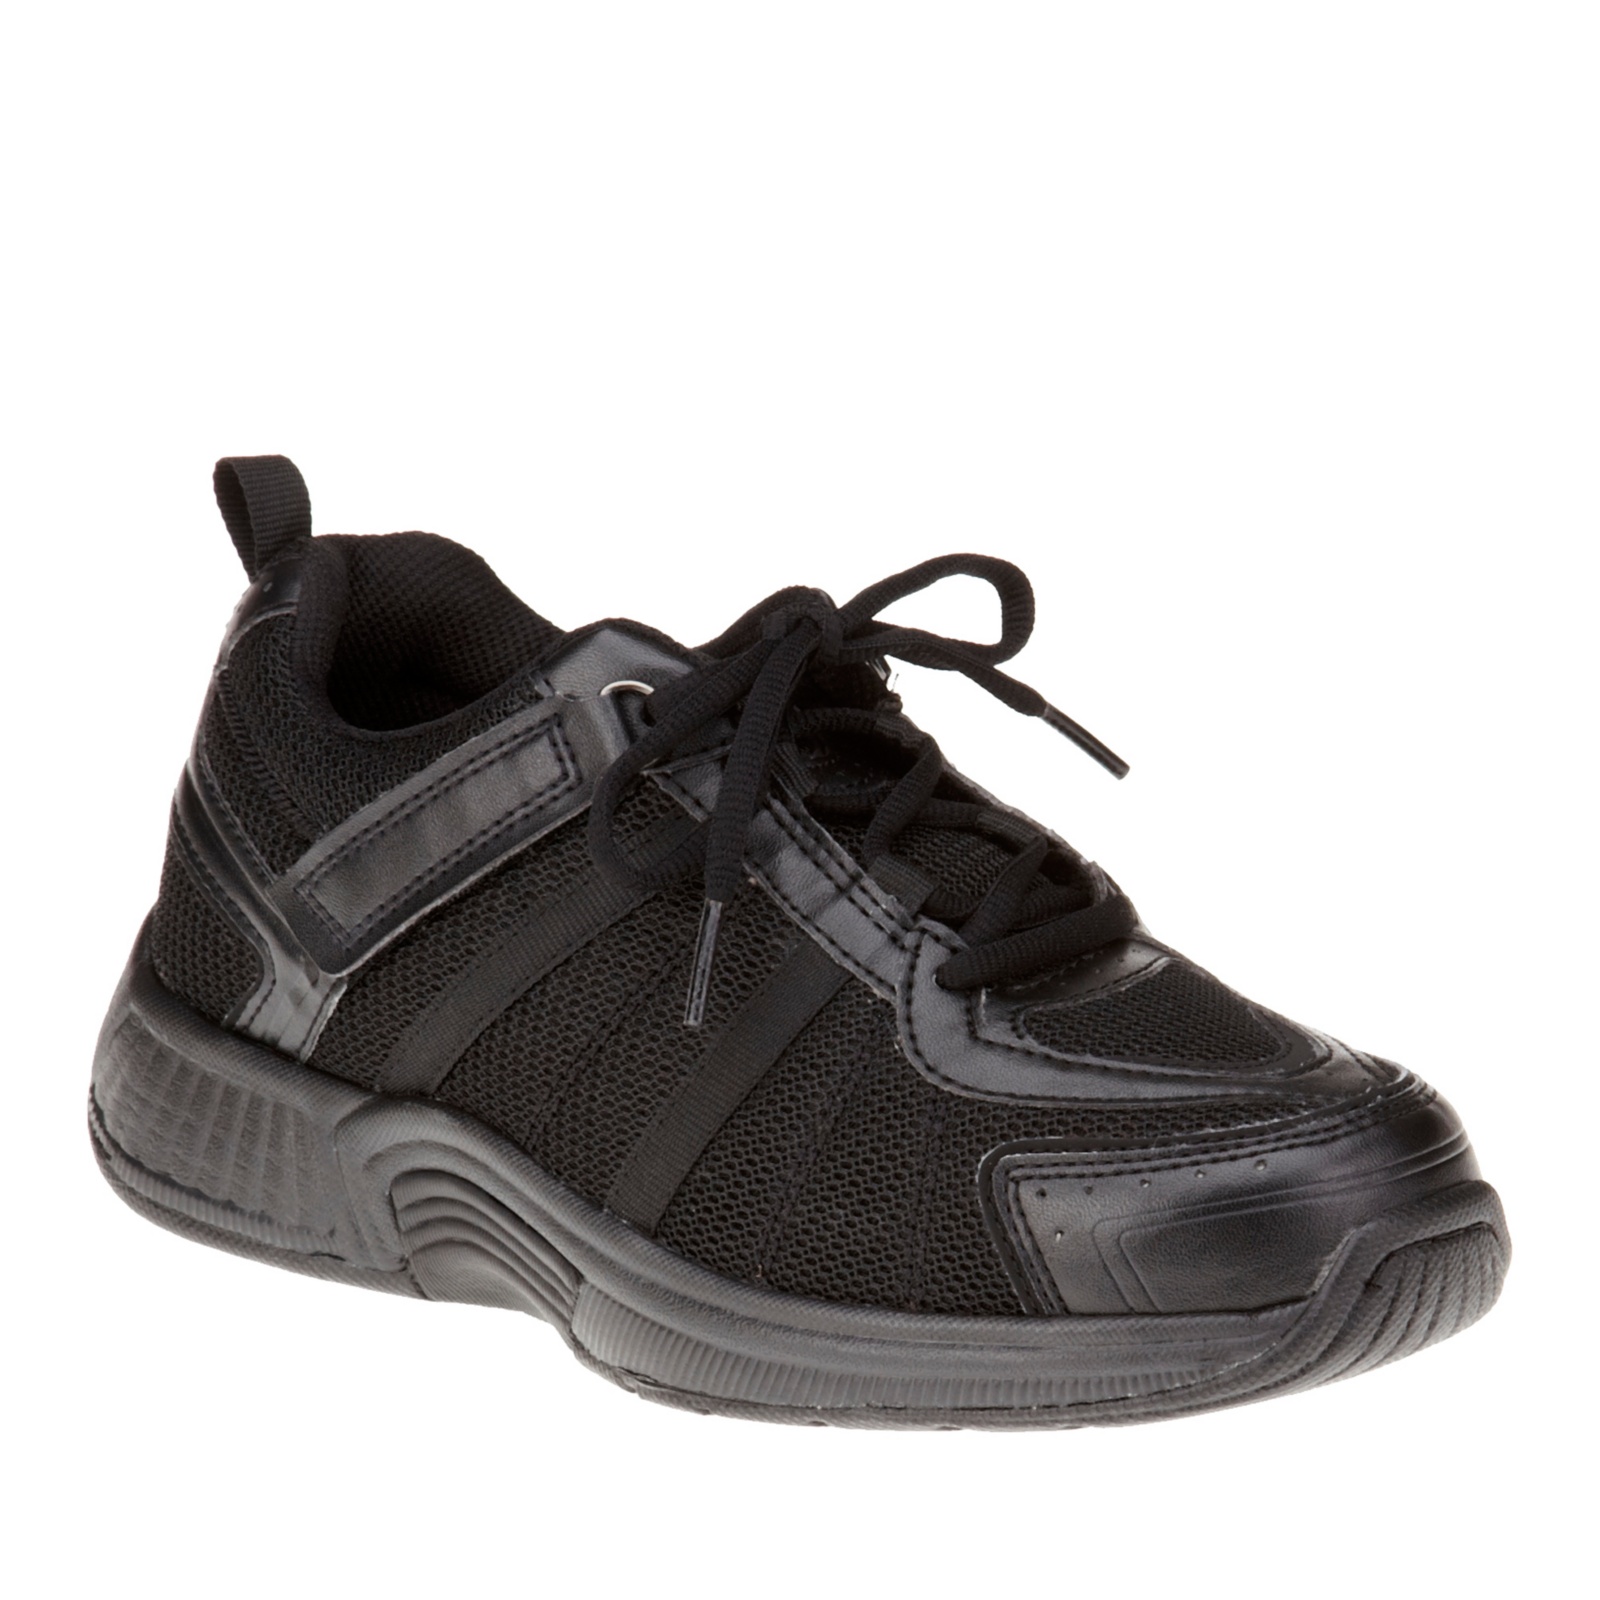 Orthofeet Women's 910 Strap-N-Lace Sport Walking Shoes